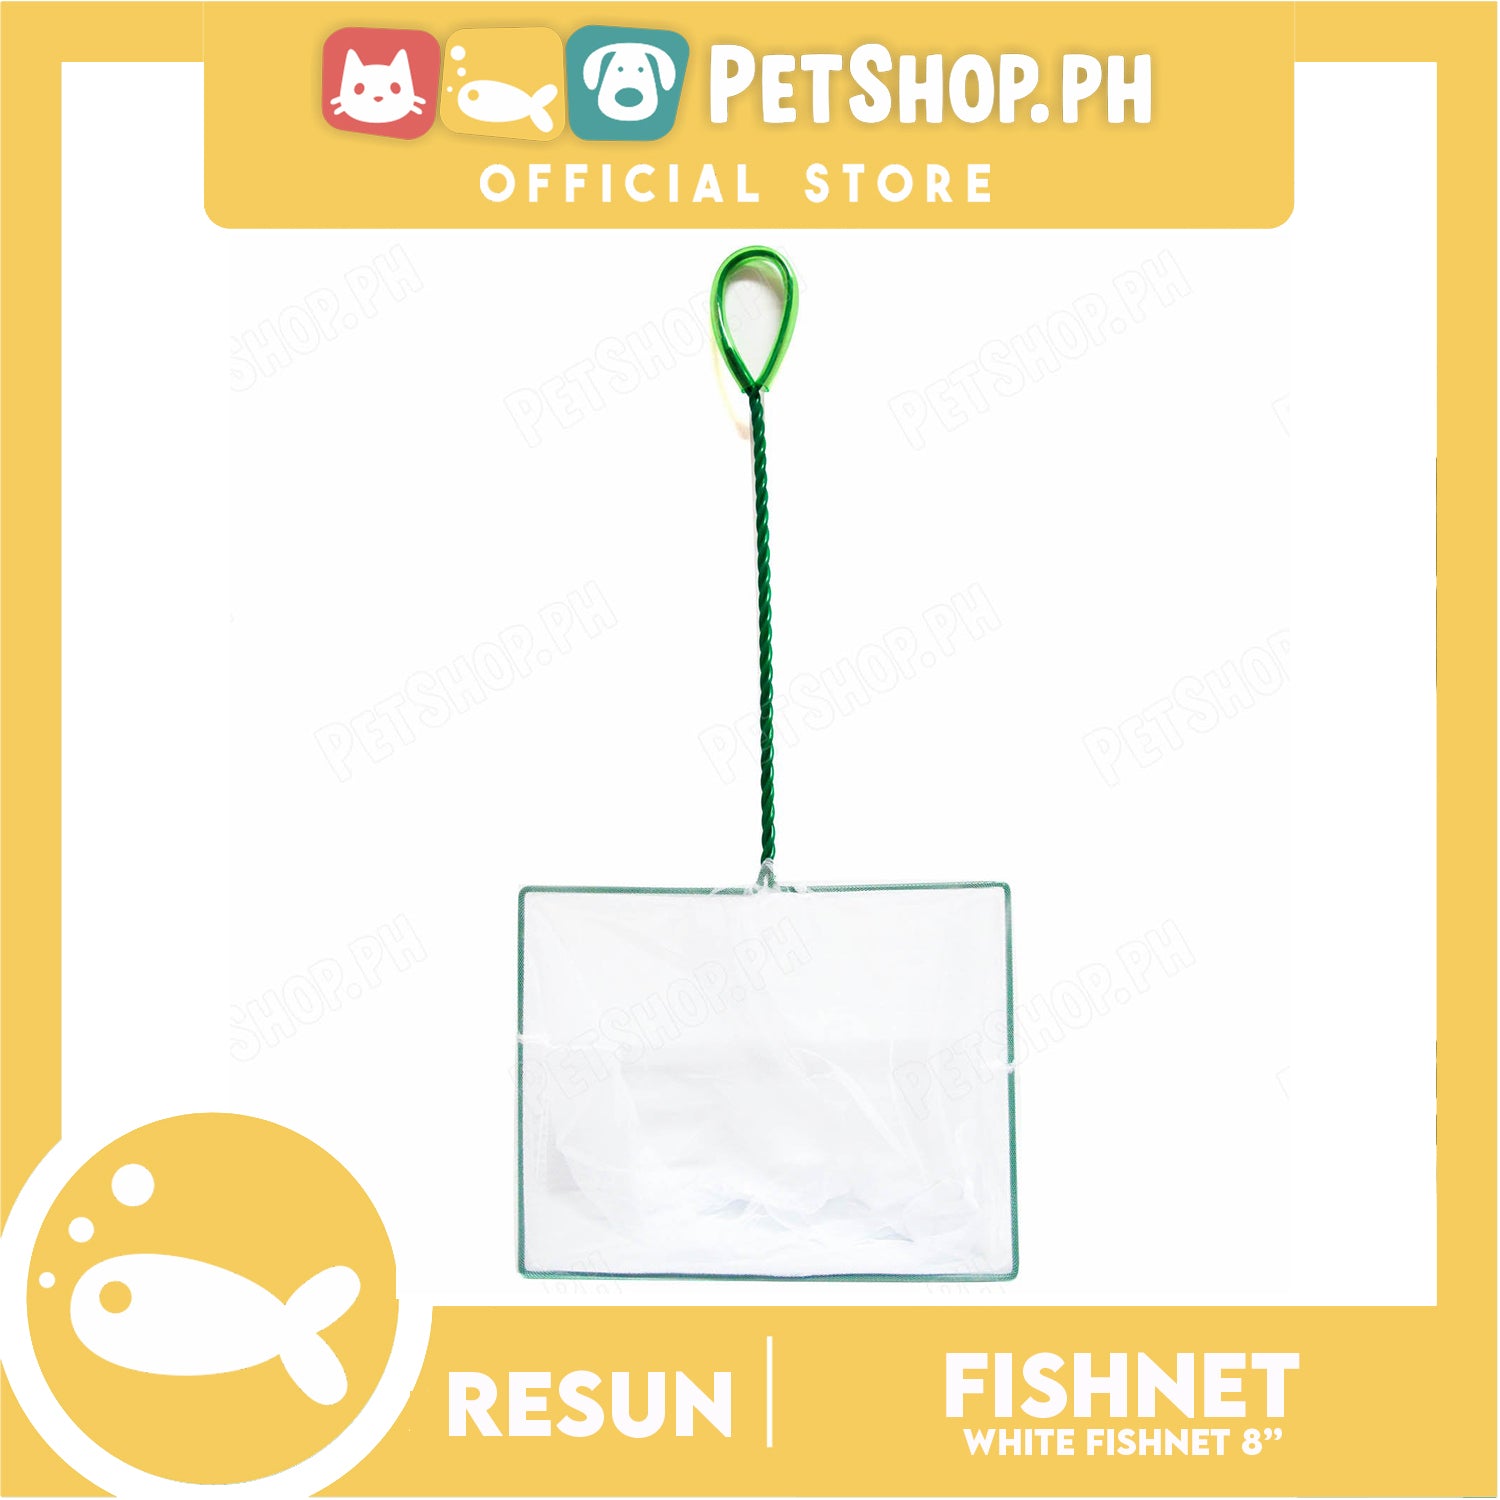 Fish Net - 8 inch